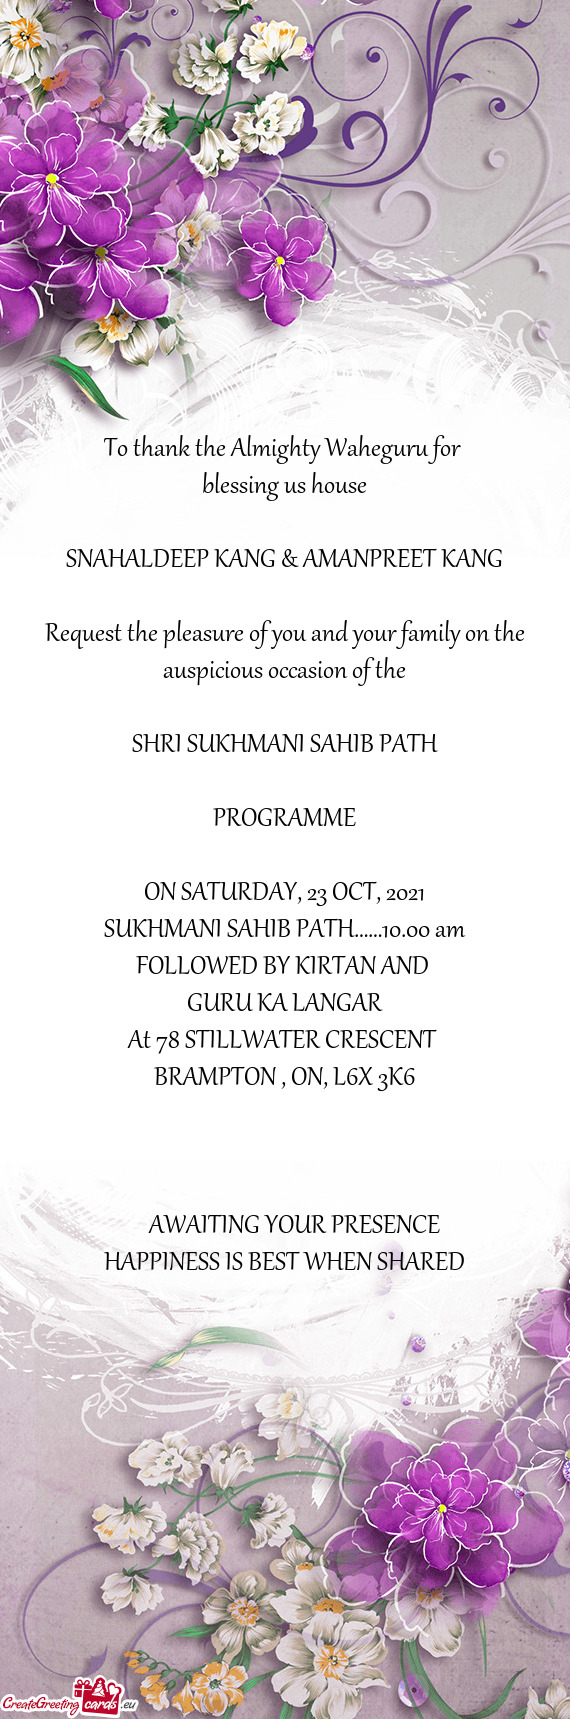 sukhmani sahib path on friday october 23rd